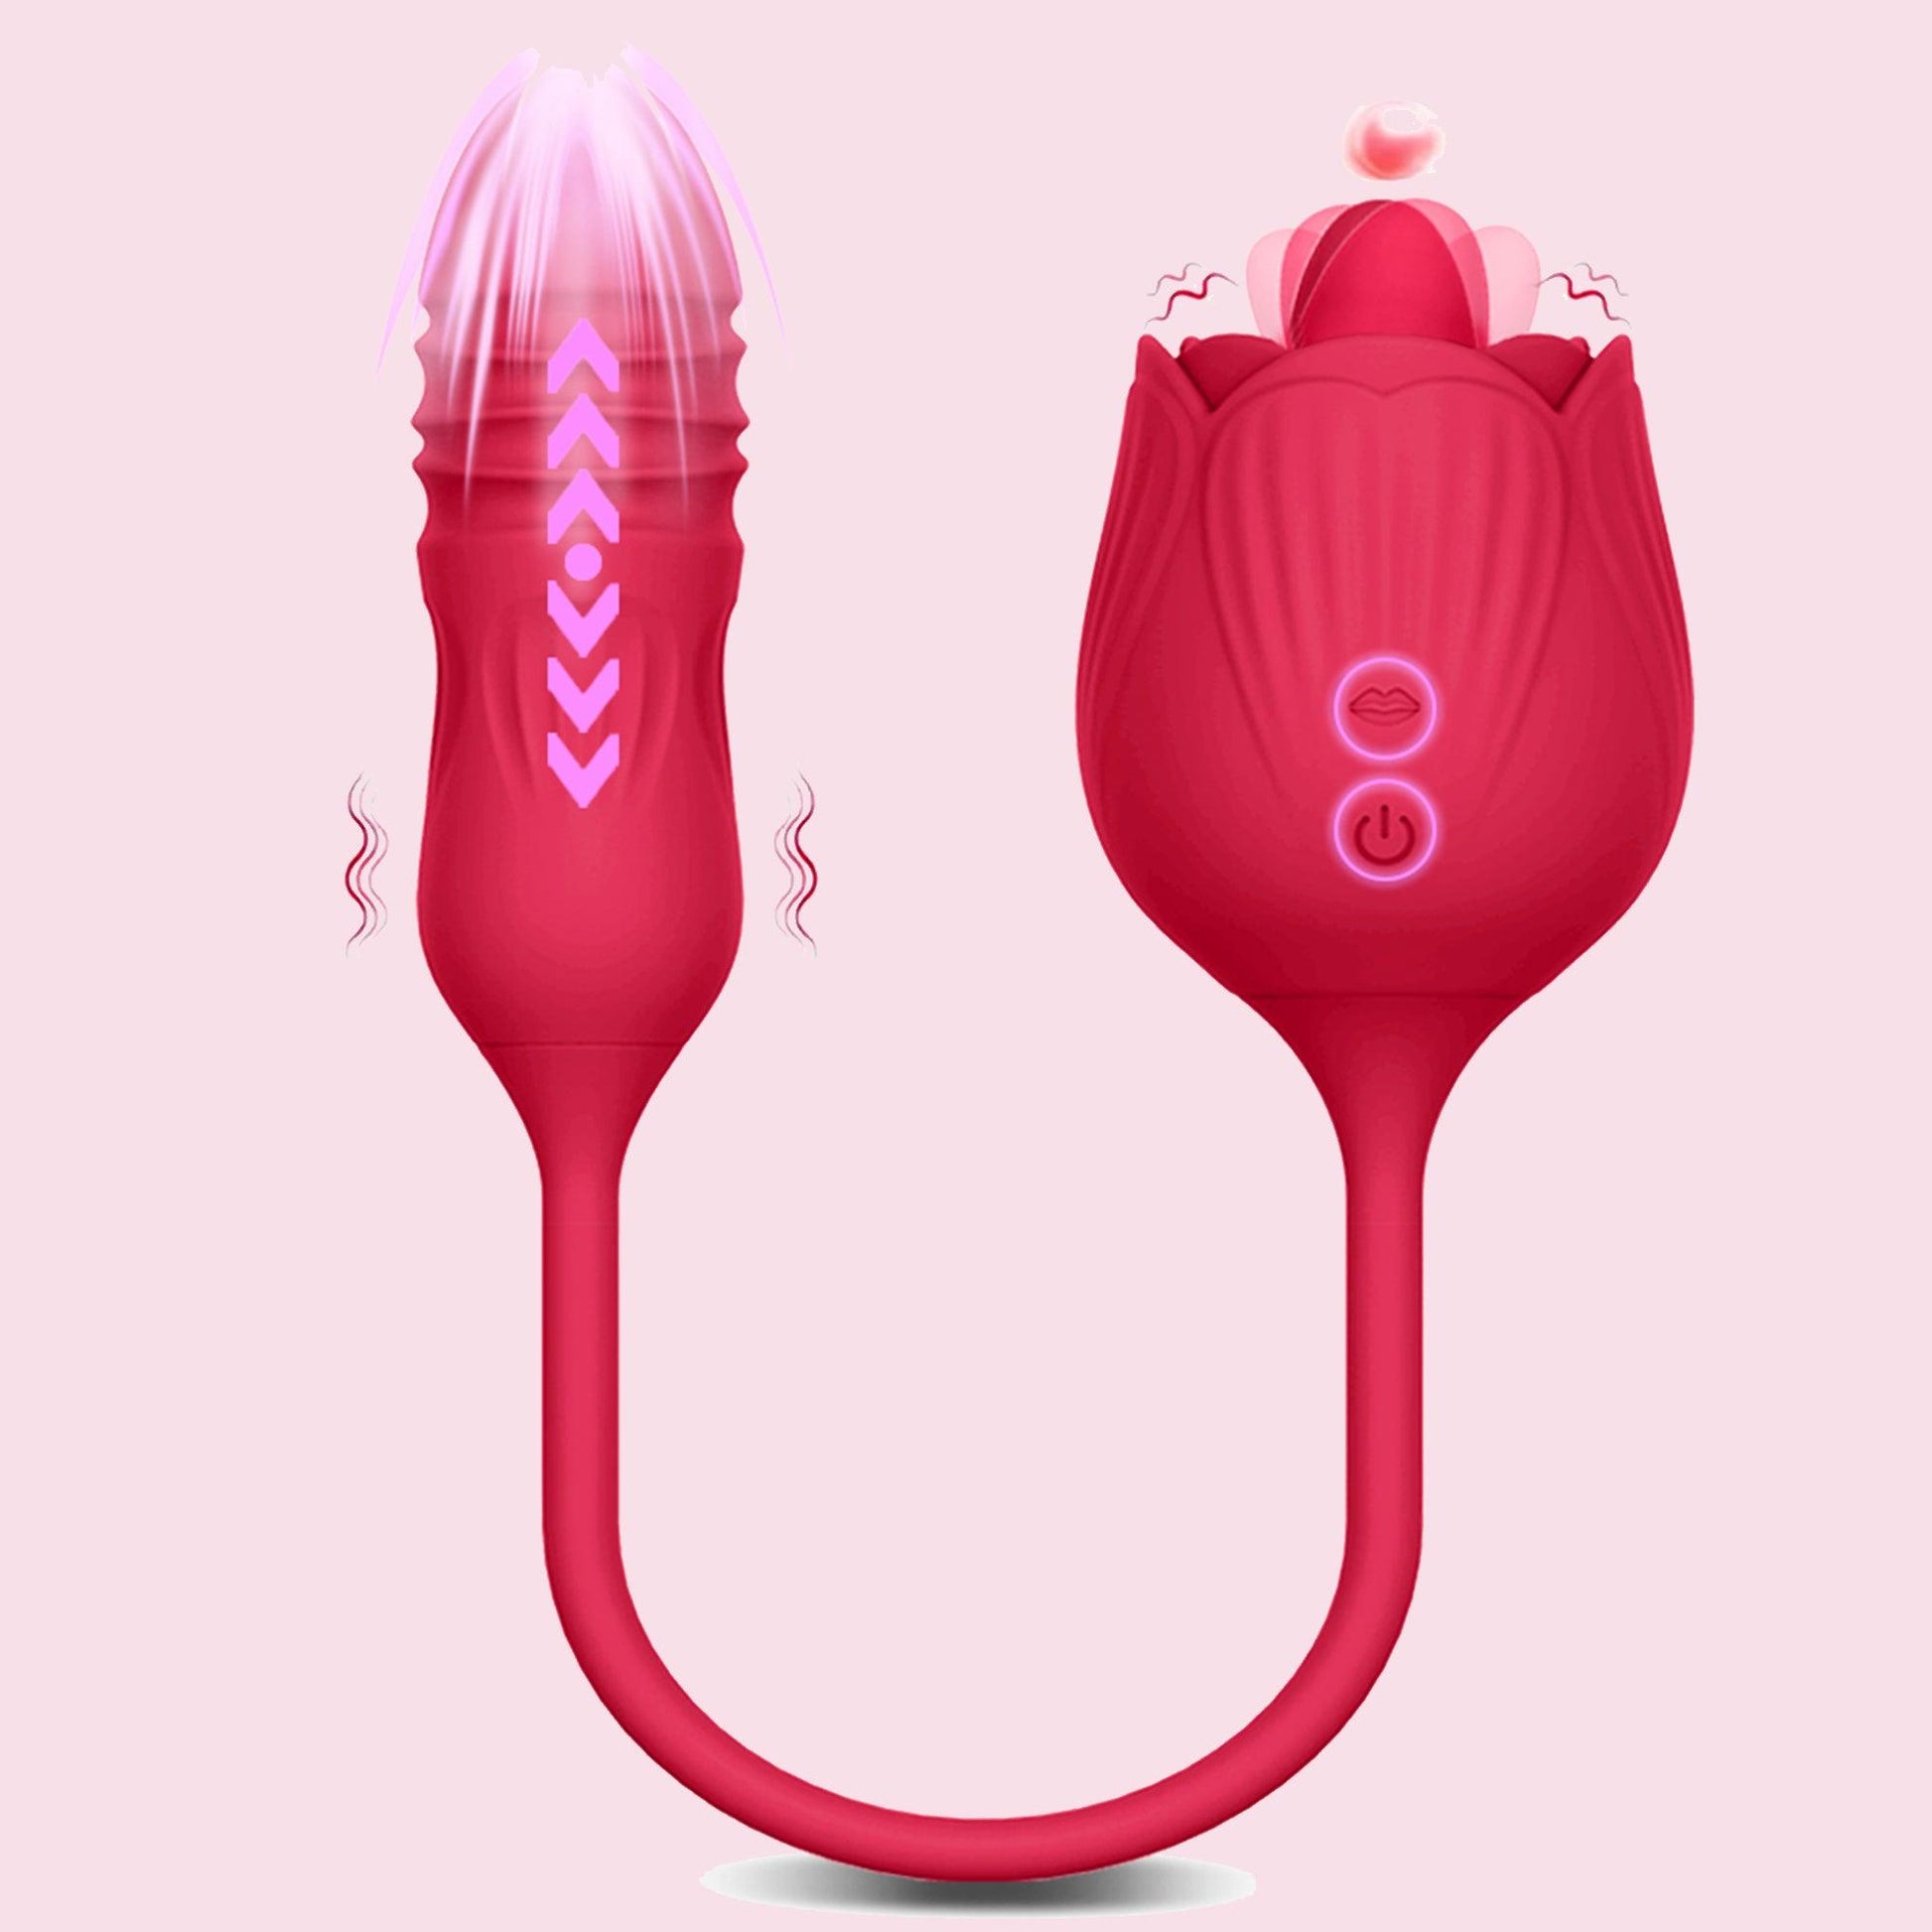 Rose Toy Dildo Thrusting Vibrator for Women Clitoris Stimulator Tongue Licking Love Egg Stretching Adults Goods Sex Toys Female - Gawk 3000 